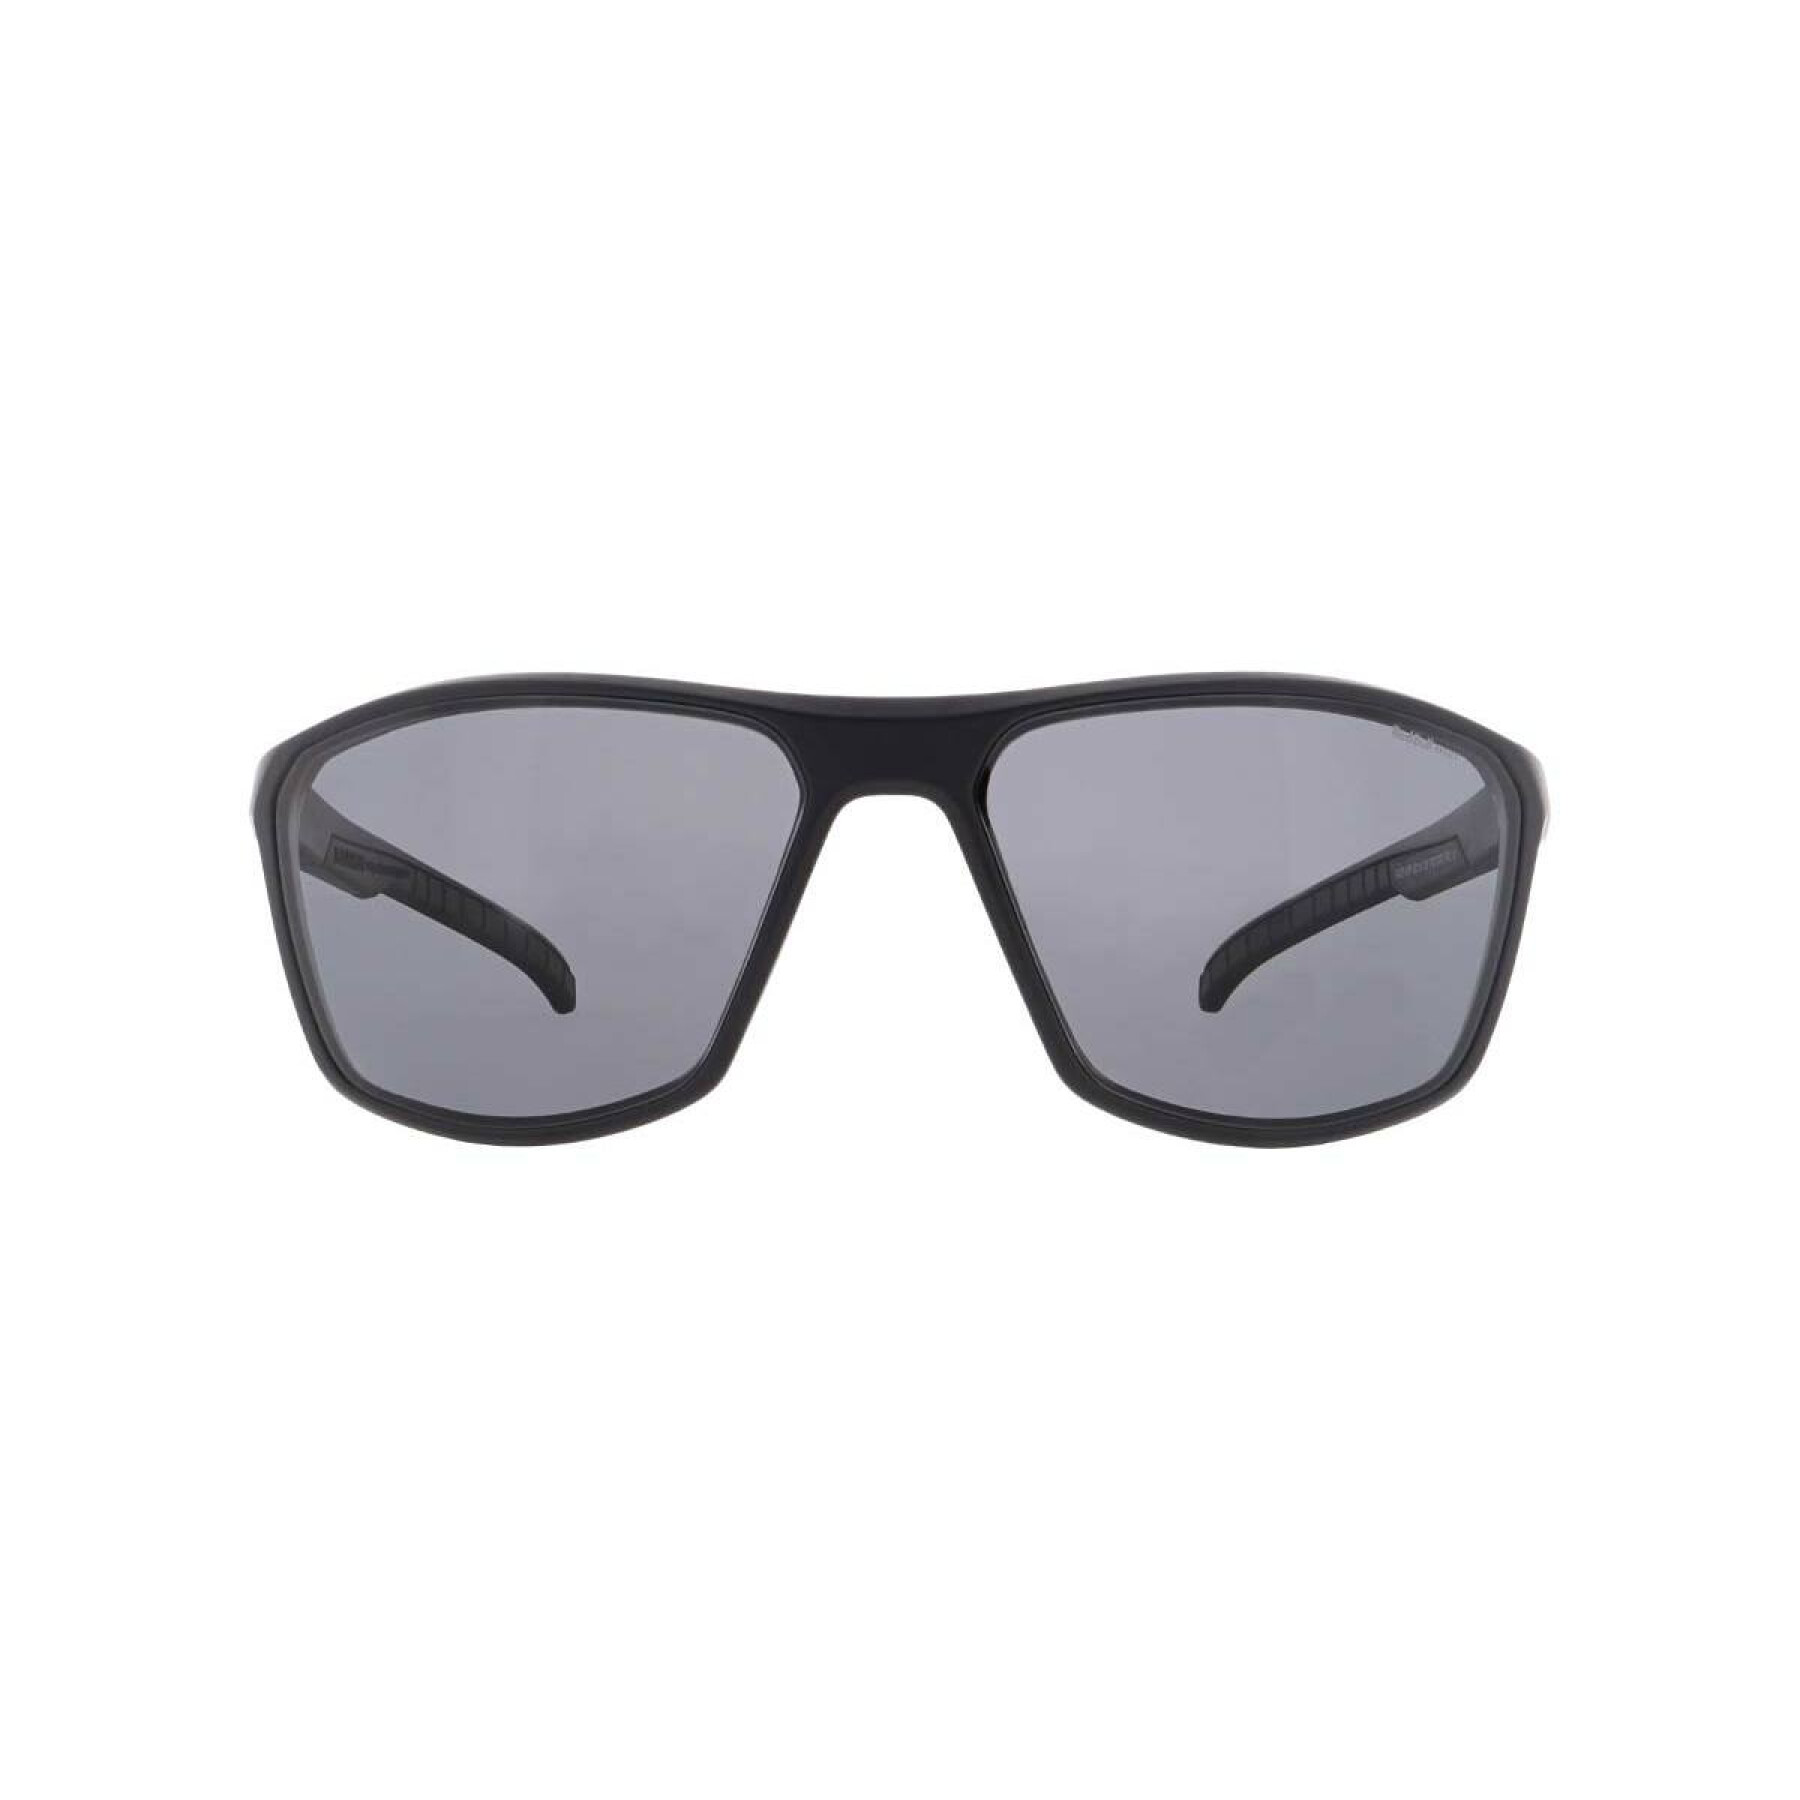 Sunglasses Redbull Spect Eyewear Raze-006P